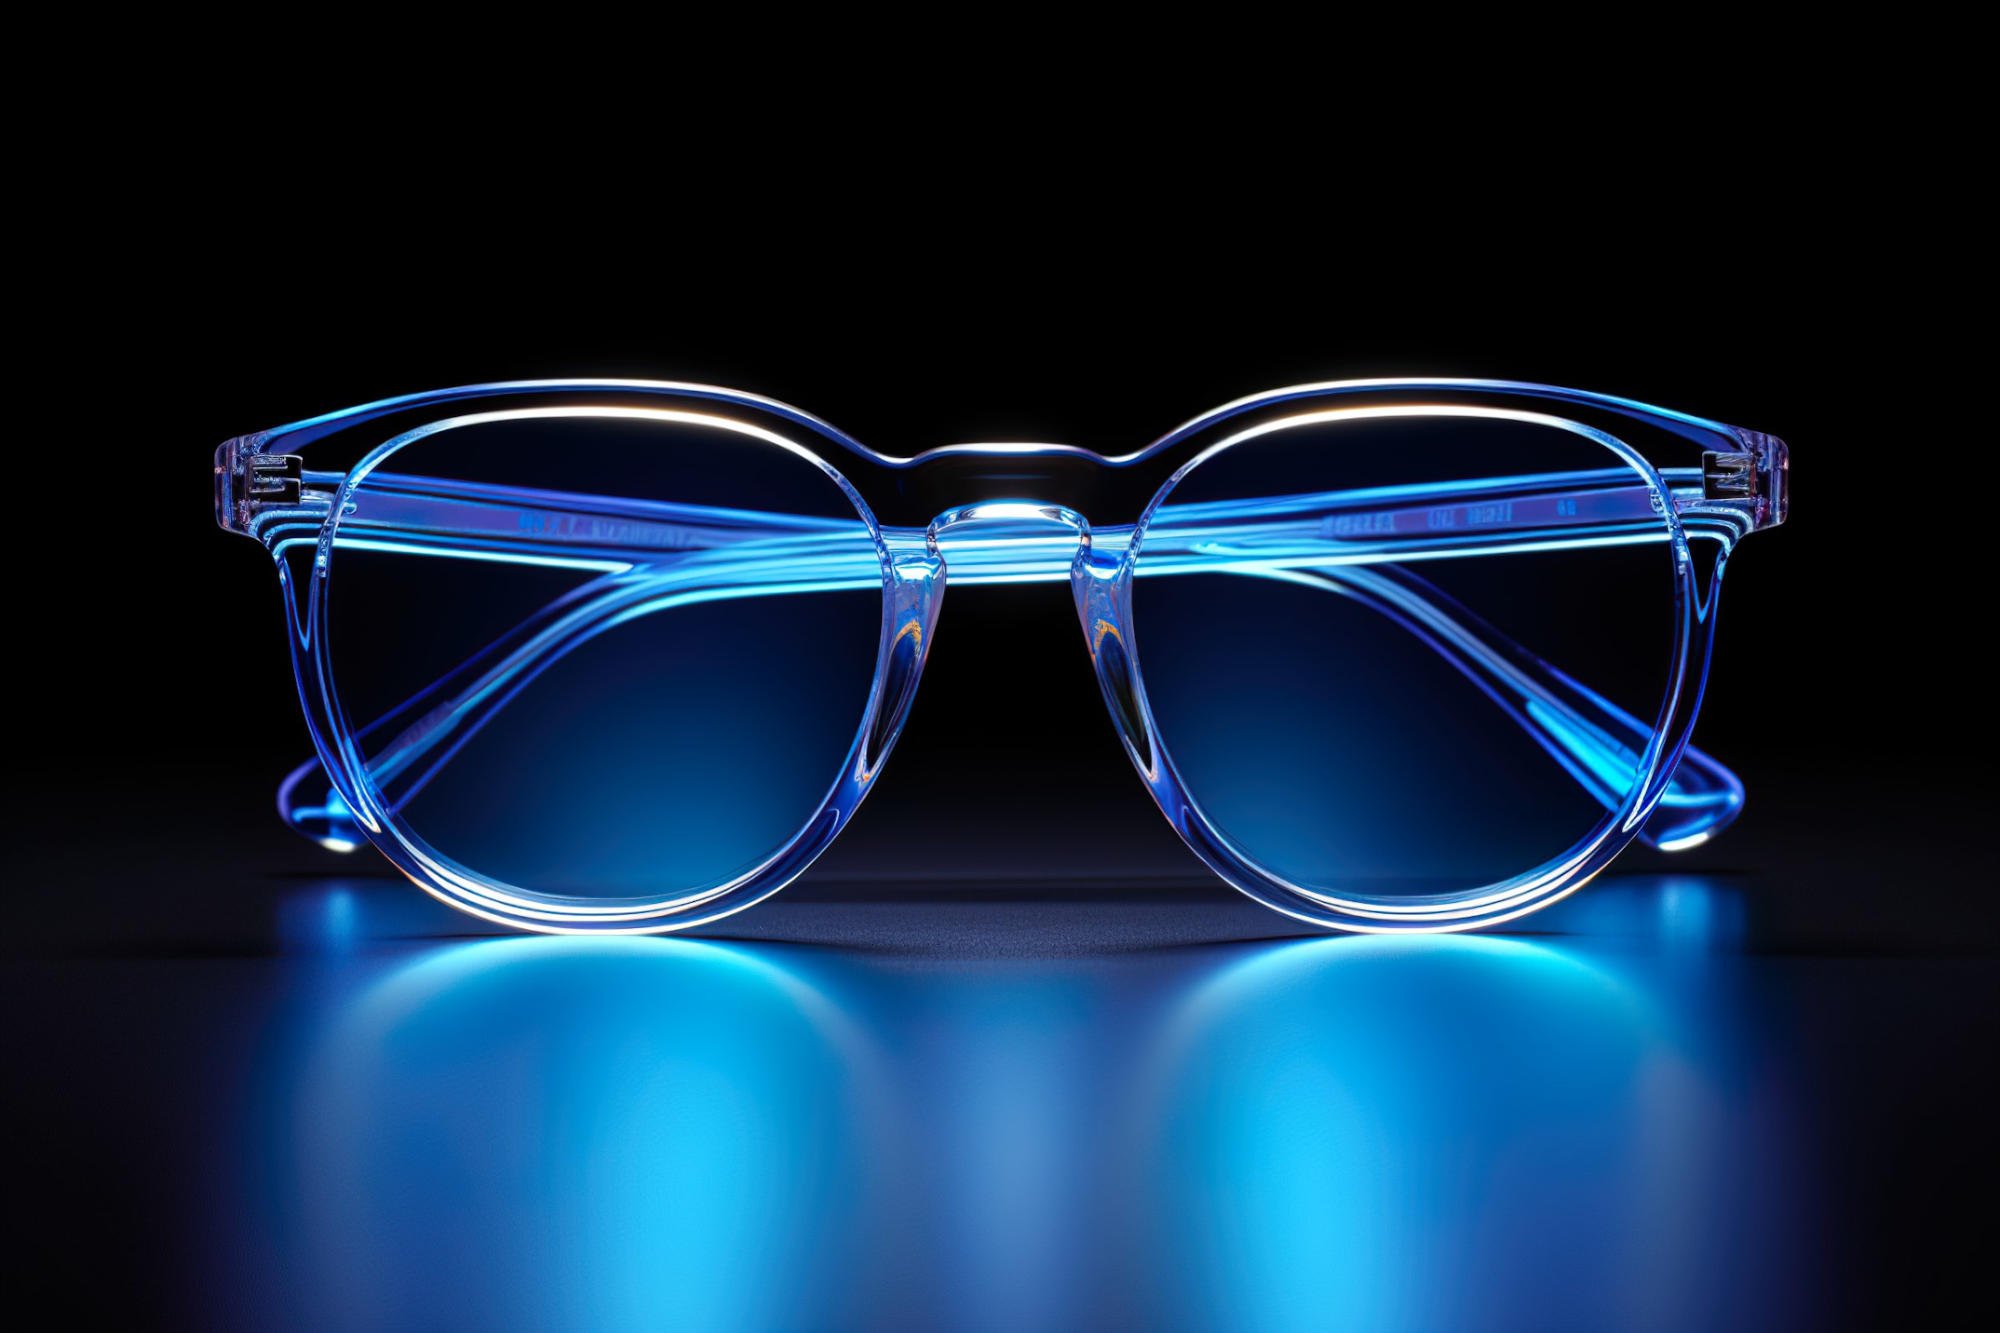 Blue-Light Glasses Debunked? New Study Casts Doubt on Eye Strain